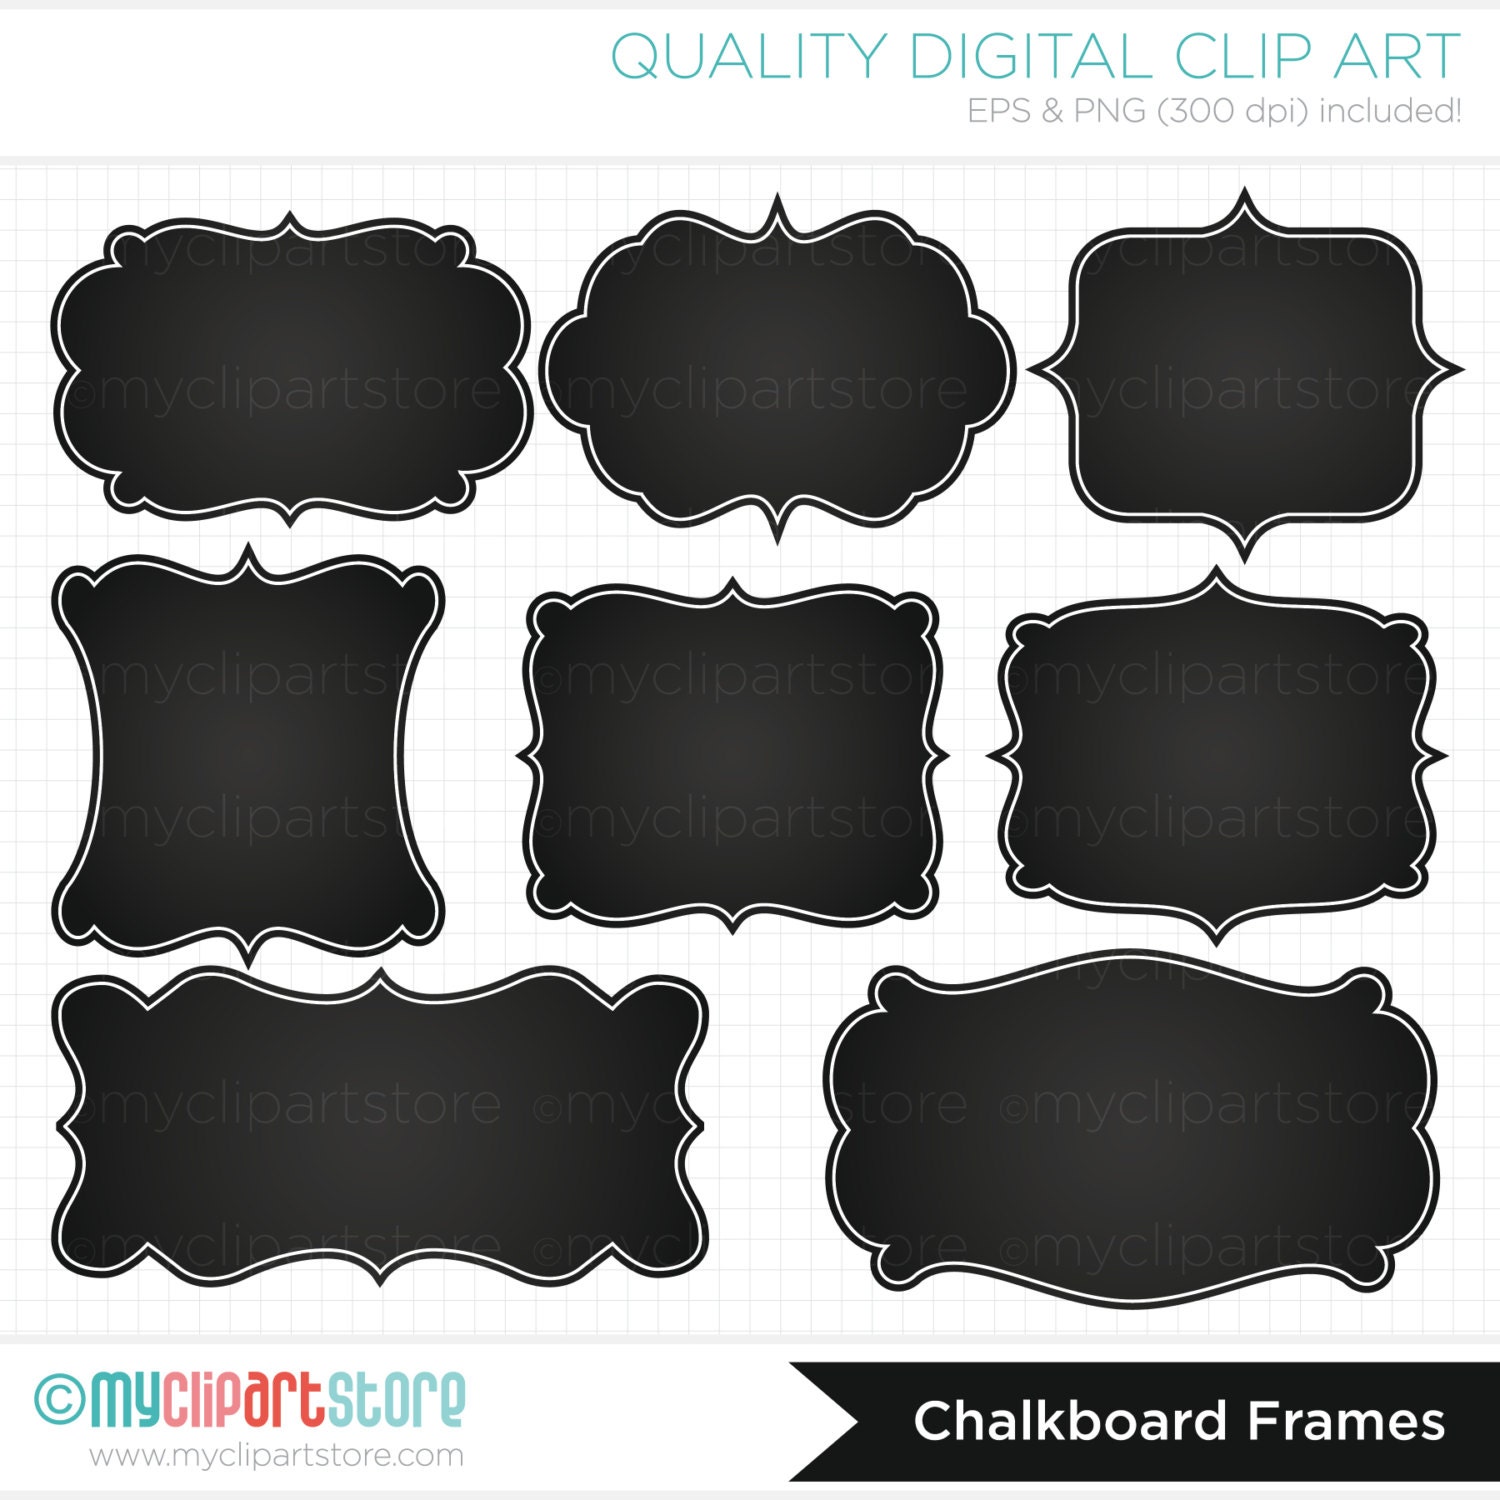 chalkboard frames clipart - photo #44